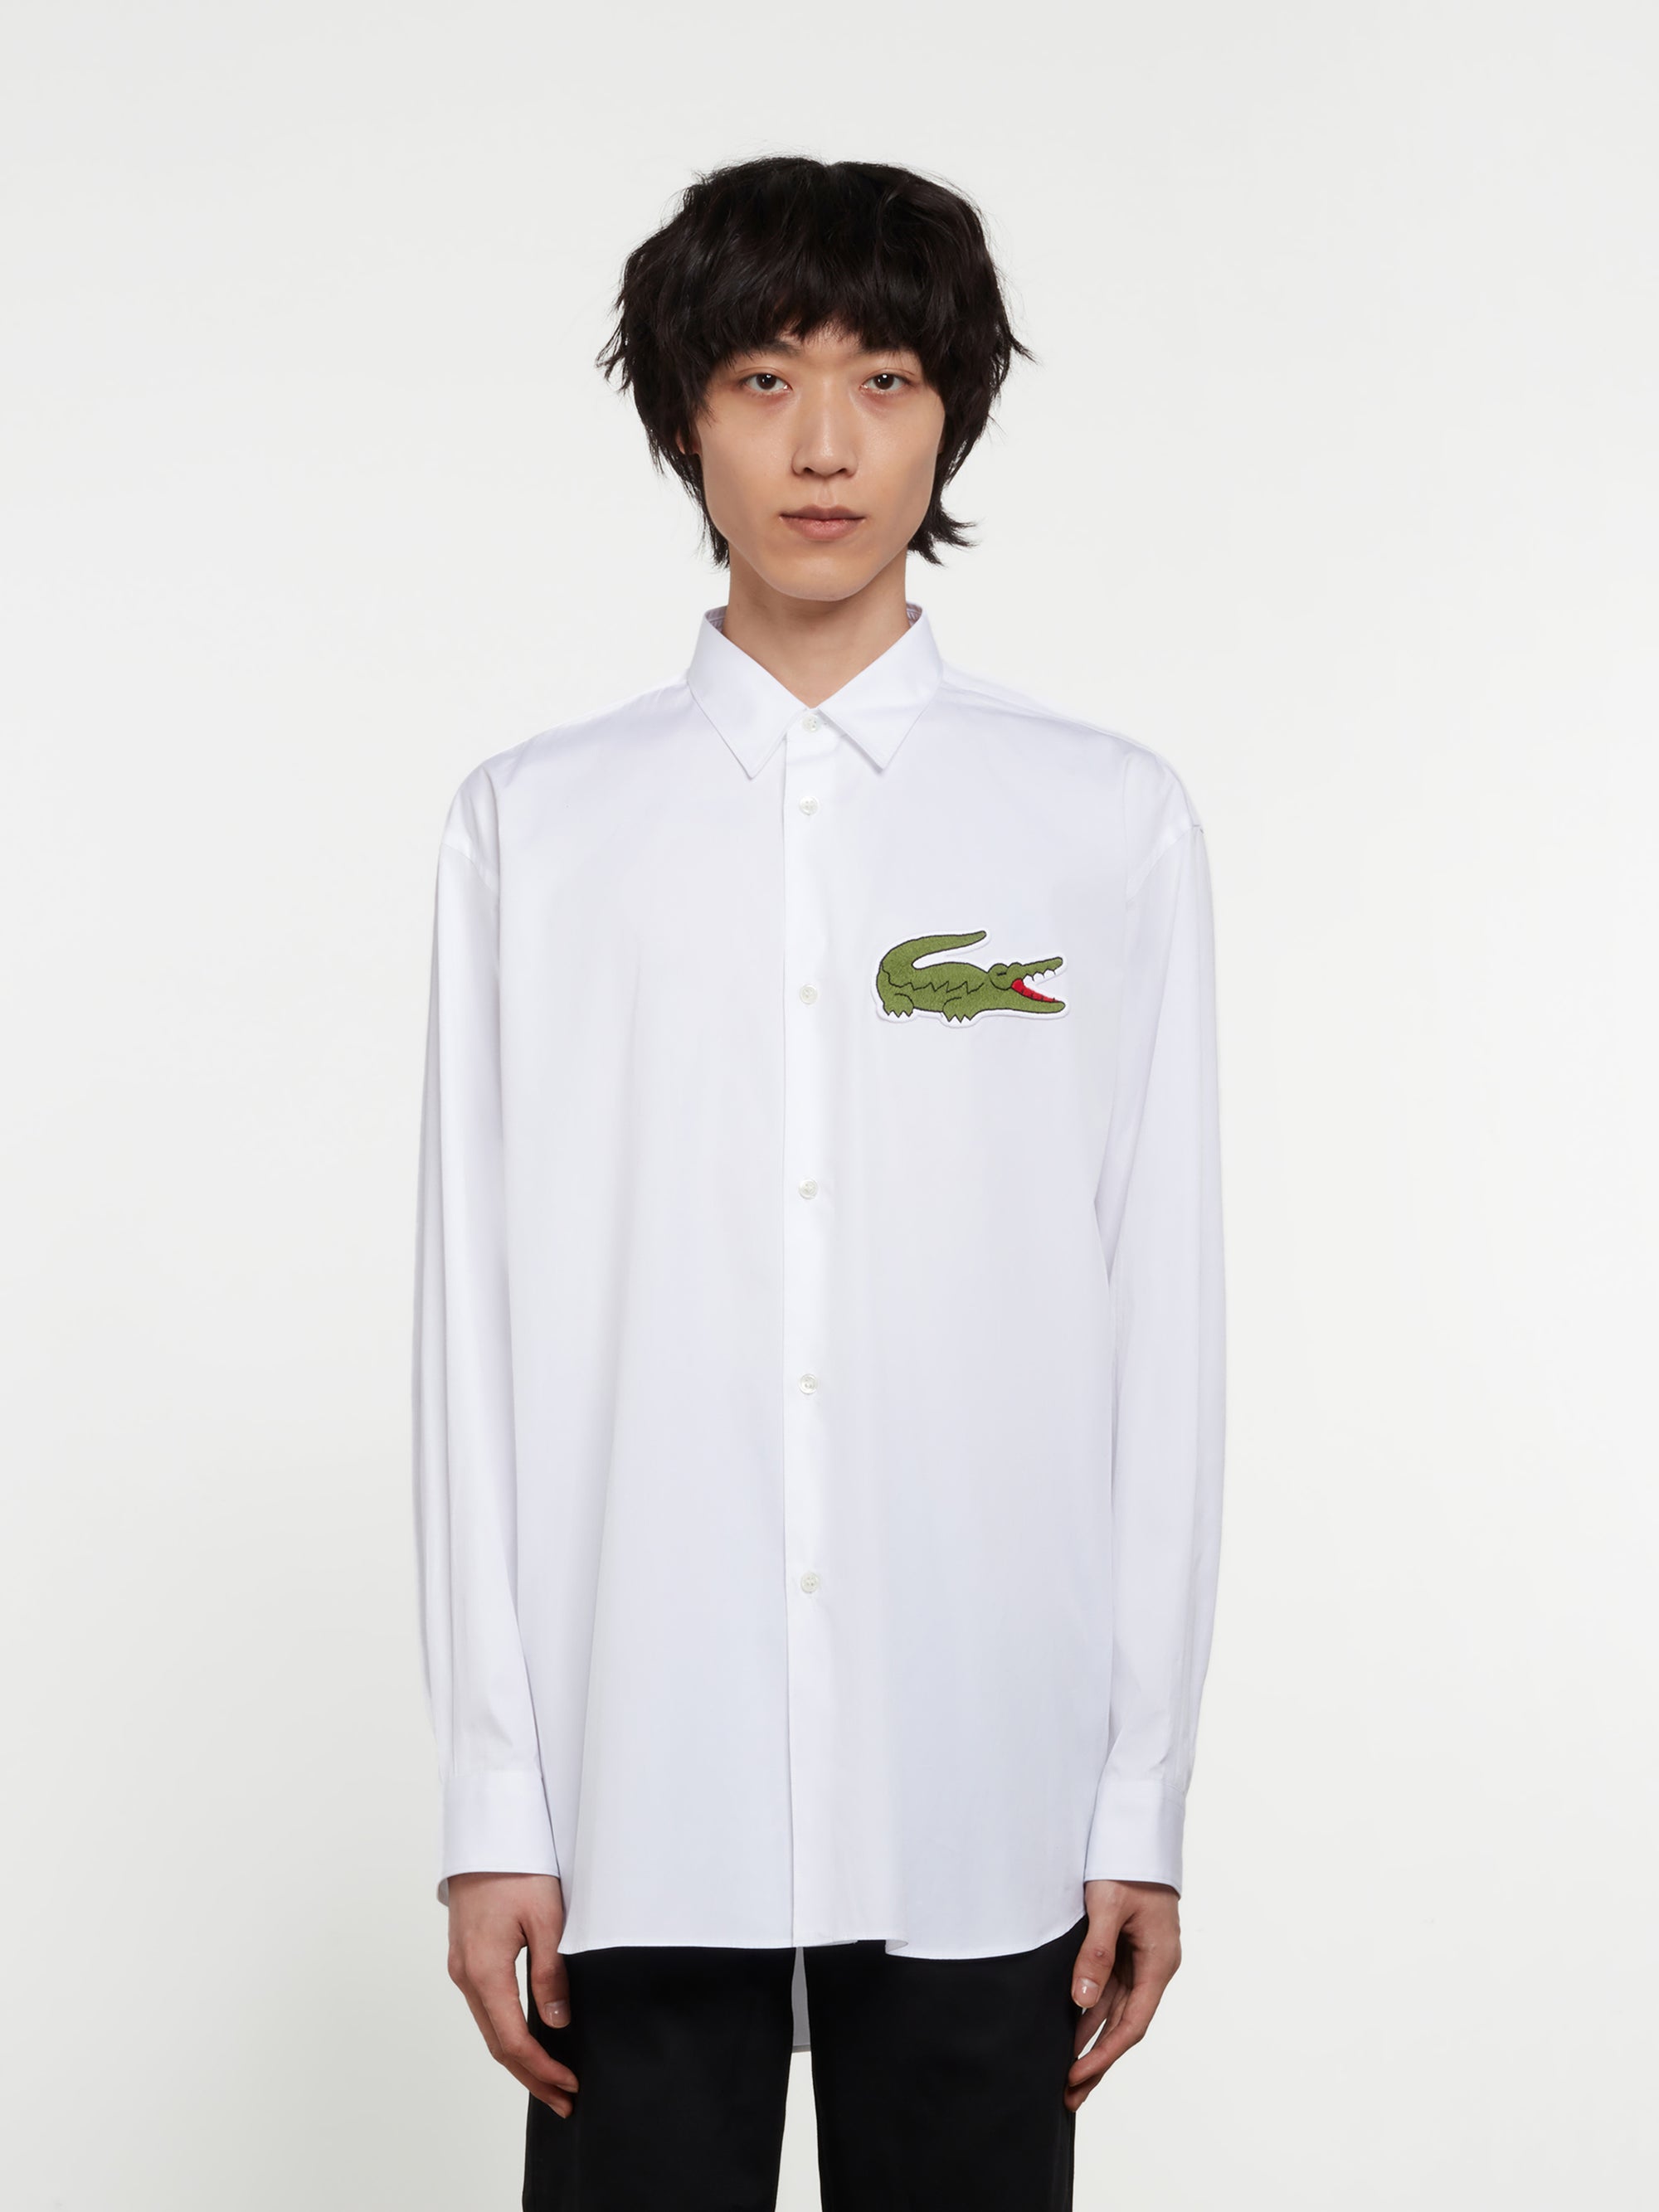 CDG Shirt - Lacoste Men’s Shirt - (White) view 1